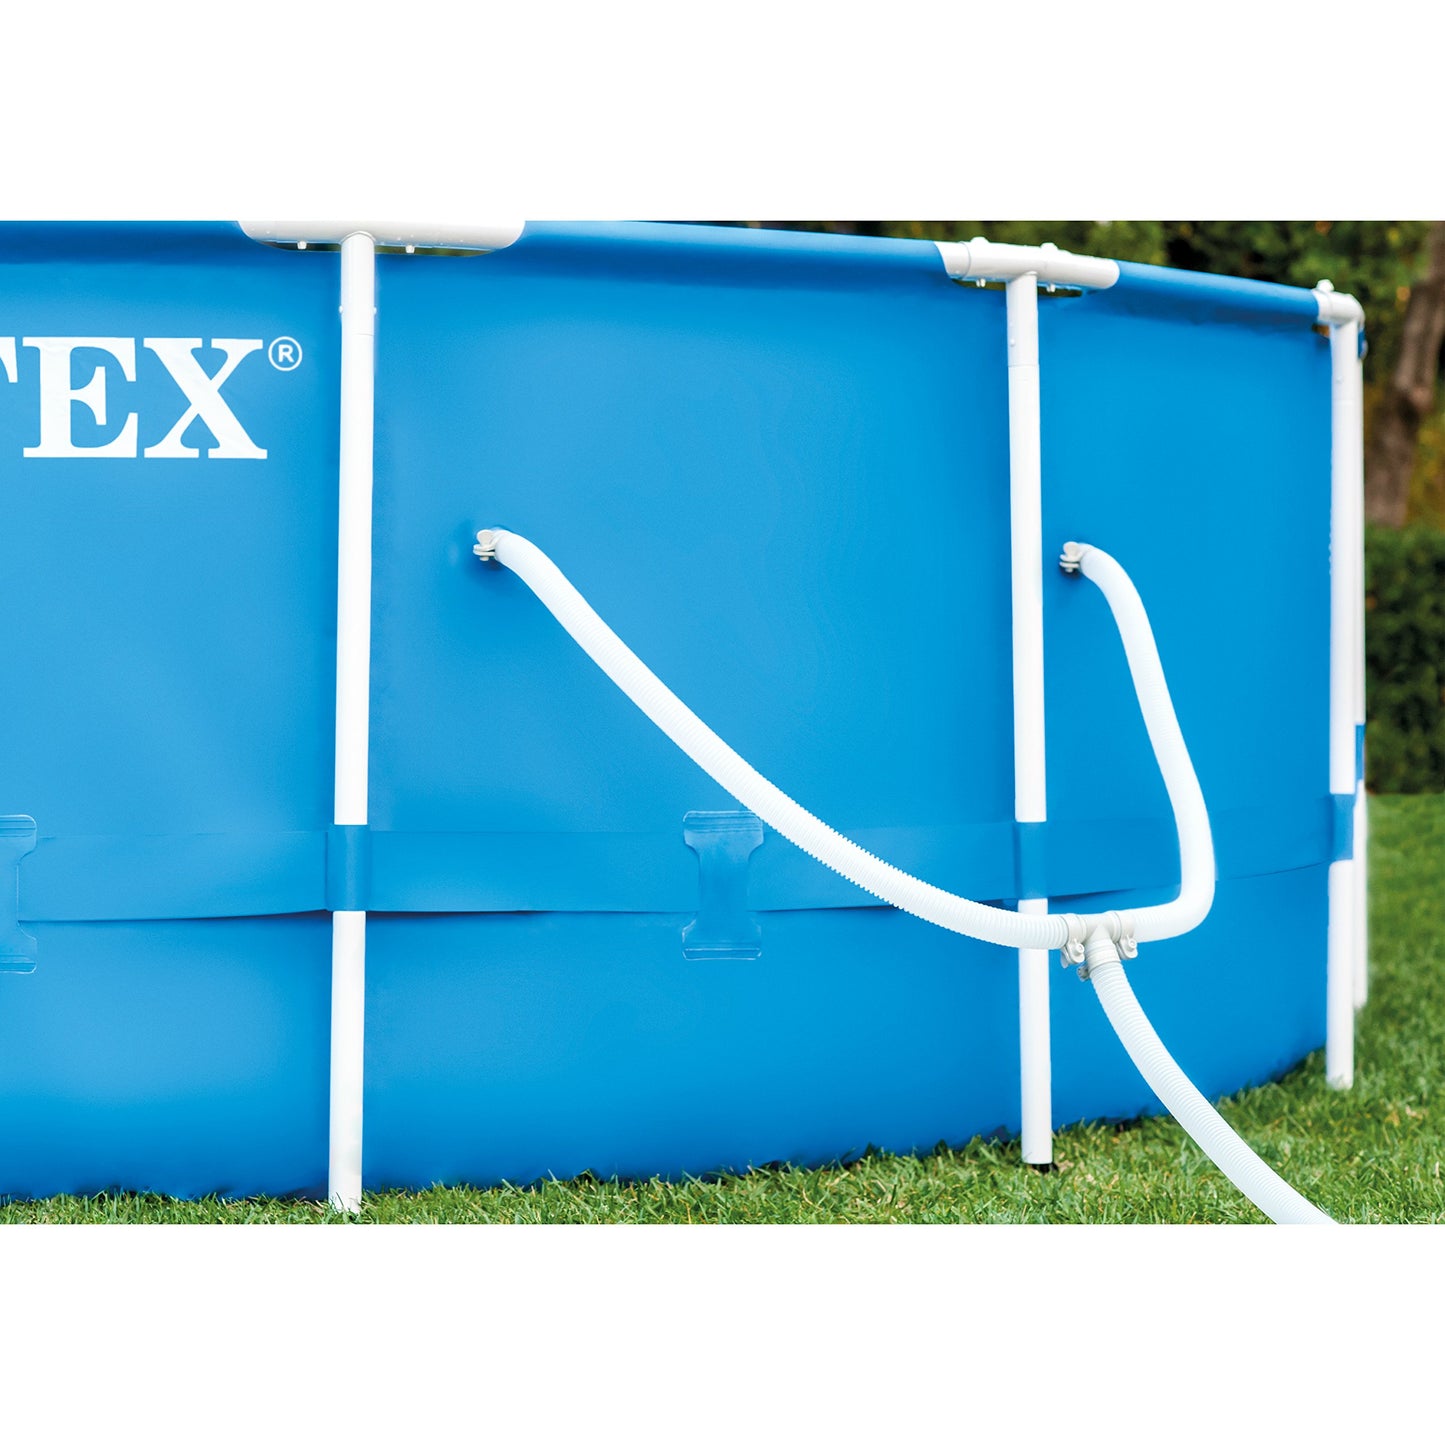 Intex 15'x48" Metal Frame Above Ground Pool Set